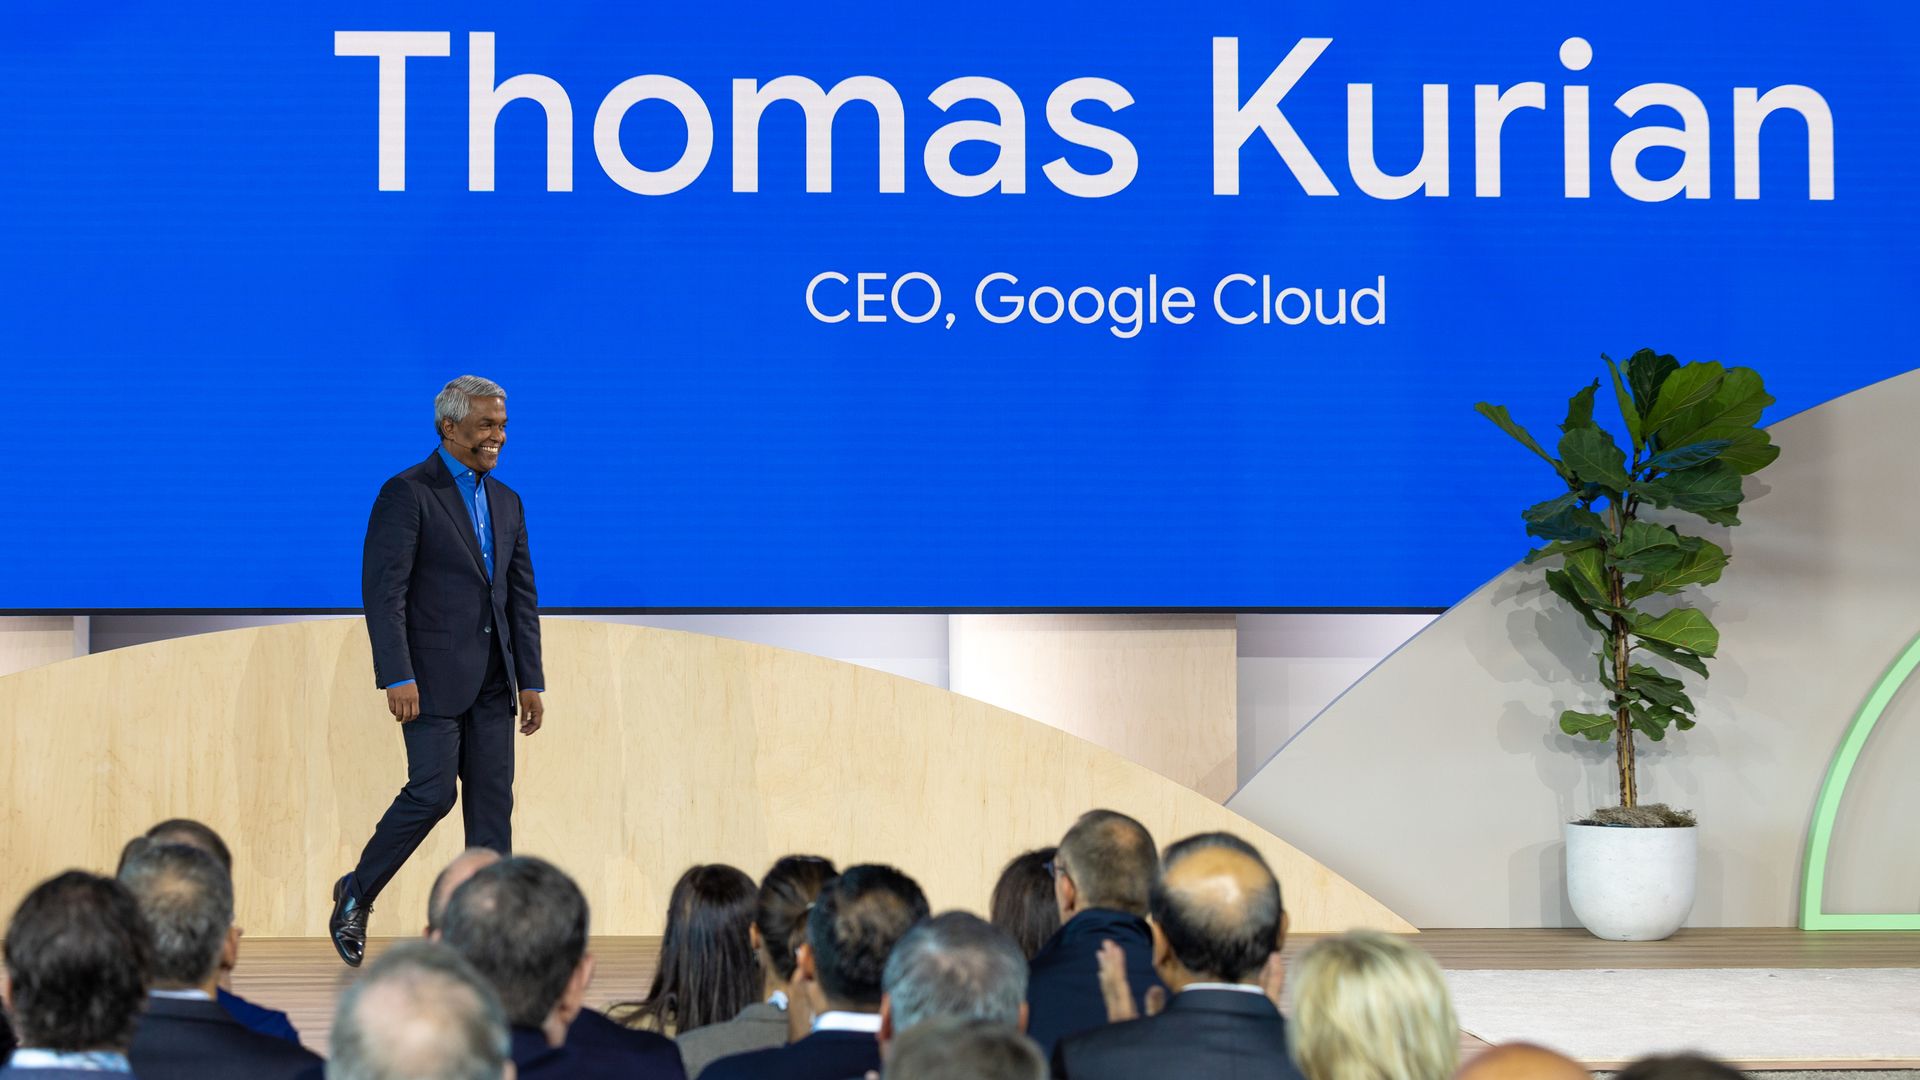 Google Cloud CEO Thomas Kurian, speaking at an event.